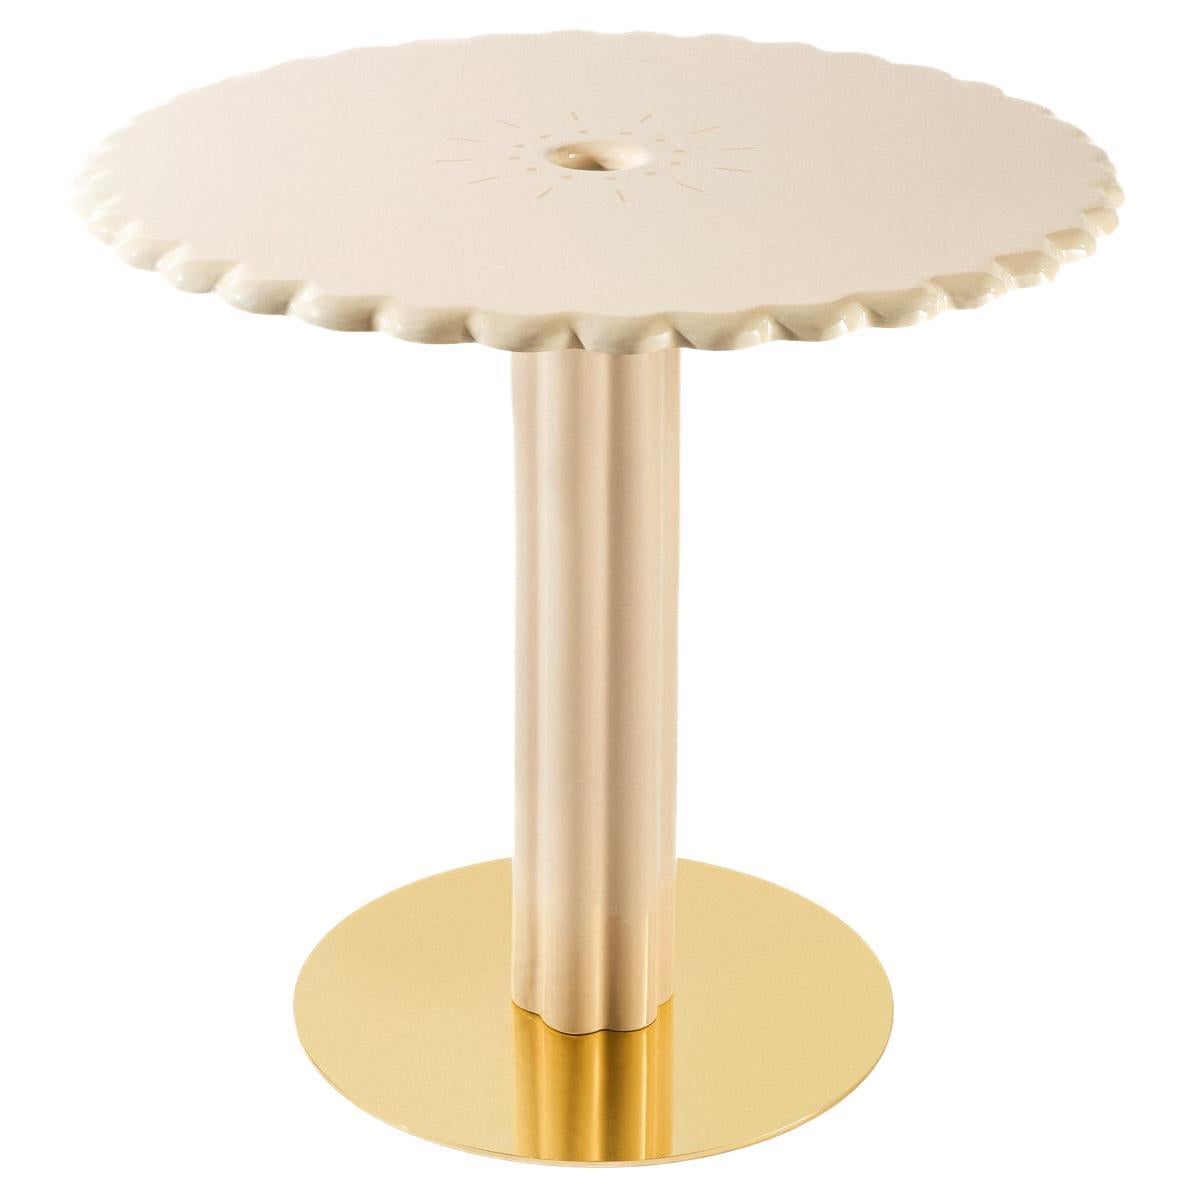 ‘Patisserie’ Lavastone & Ceramic table by Studio Yellowdot